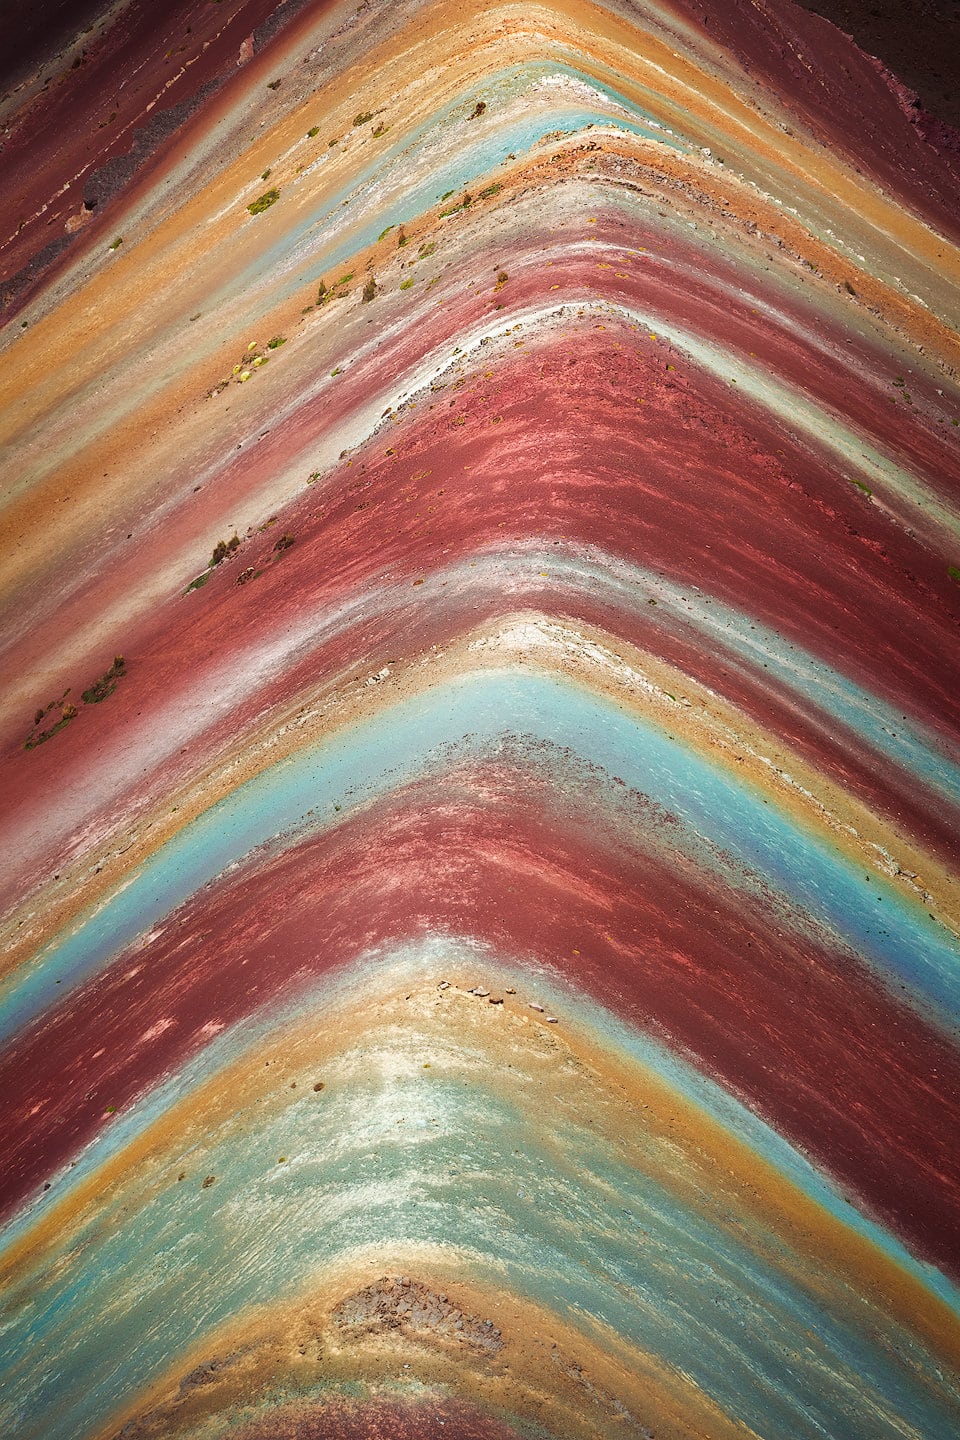 Colourful sediment on Vinicunca the rainbow mountain in Perú.